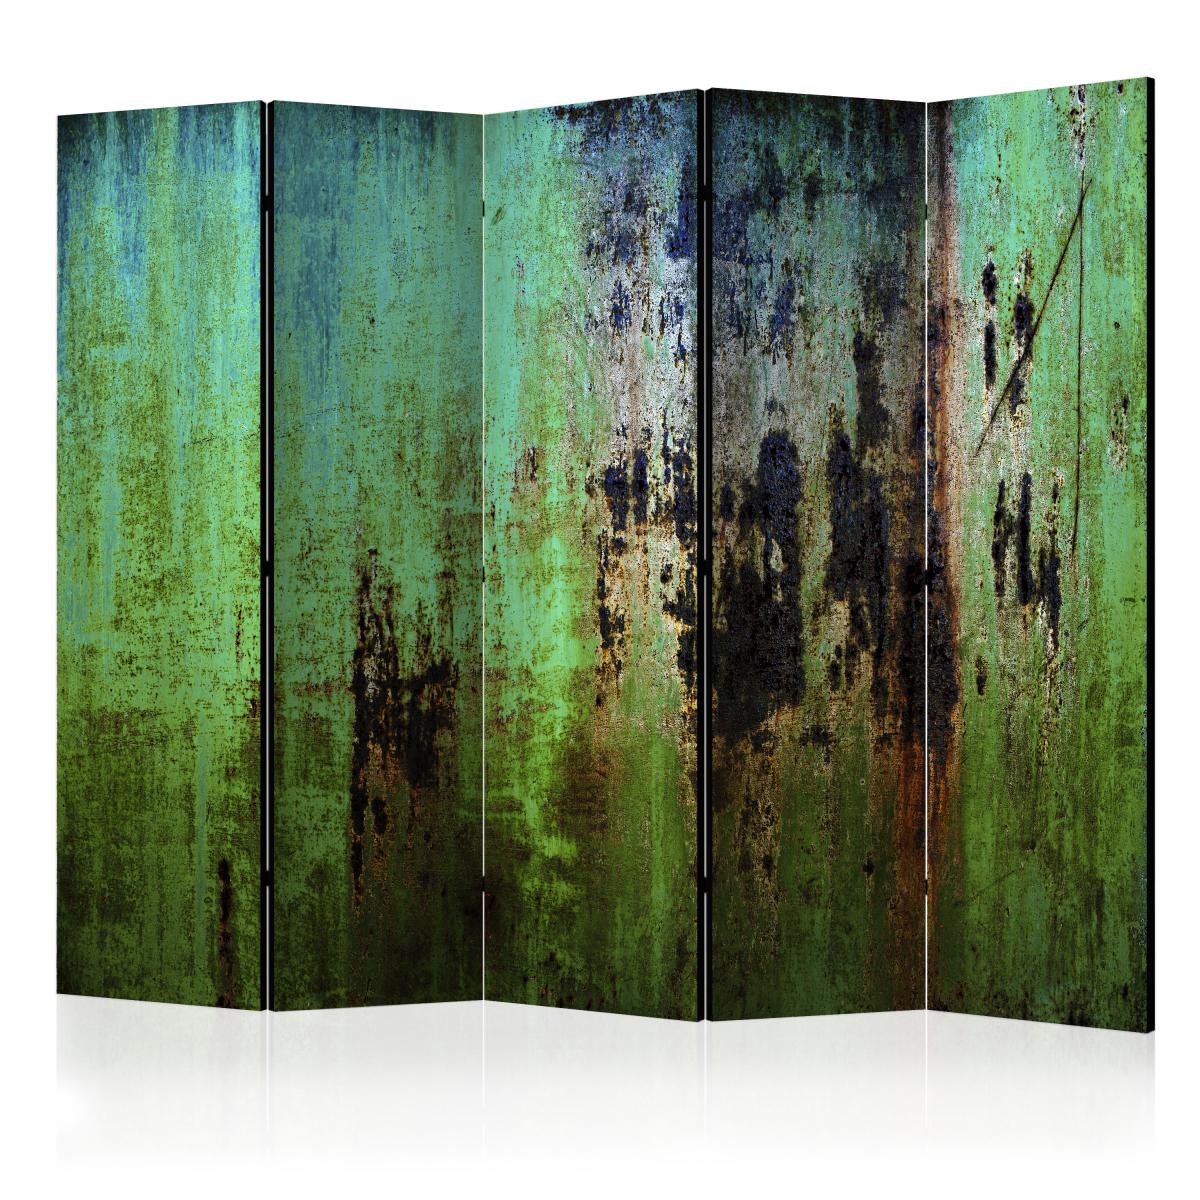 Bimago - Paravent 5 volets - Emerald Mystery II [Room Dividers] - Décoration, image, art | 225x172 cm | XL - Grand Format | - Cloisons